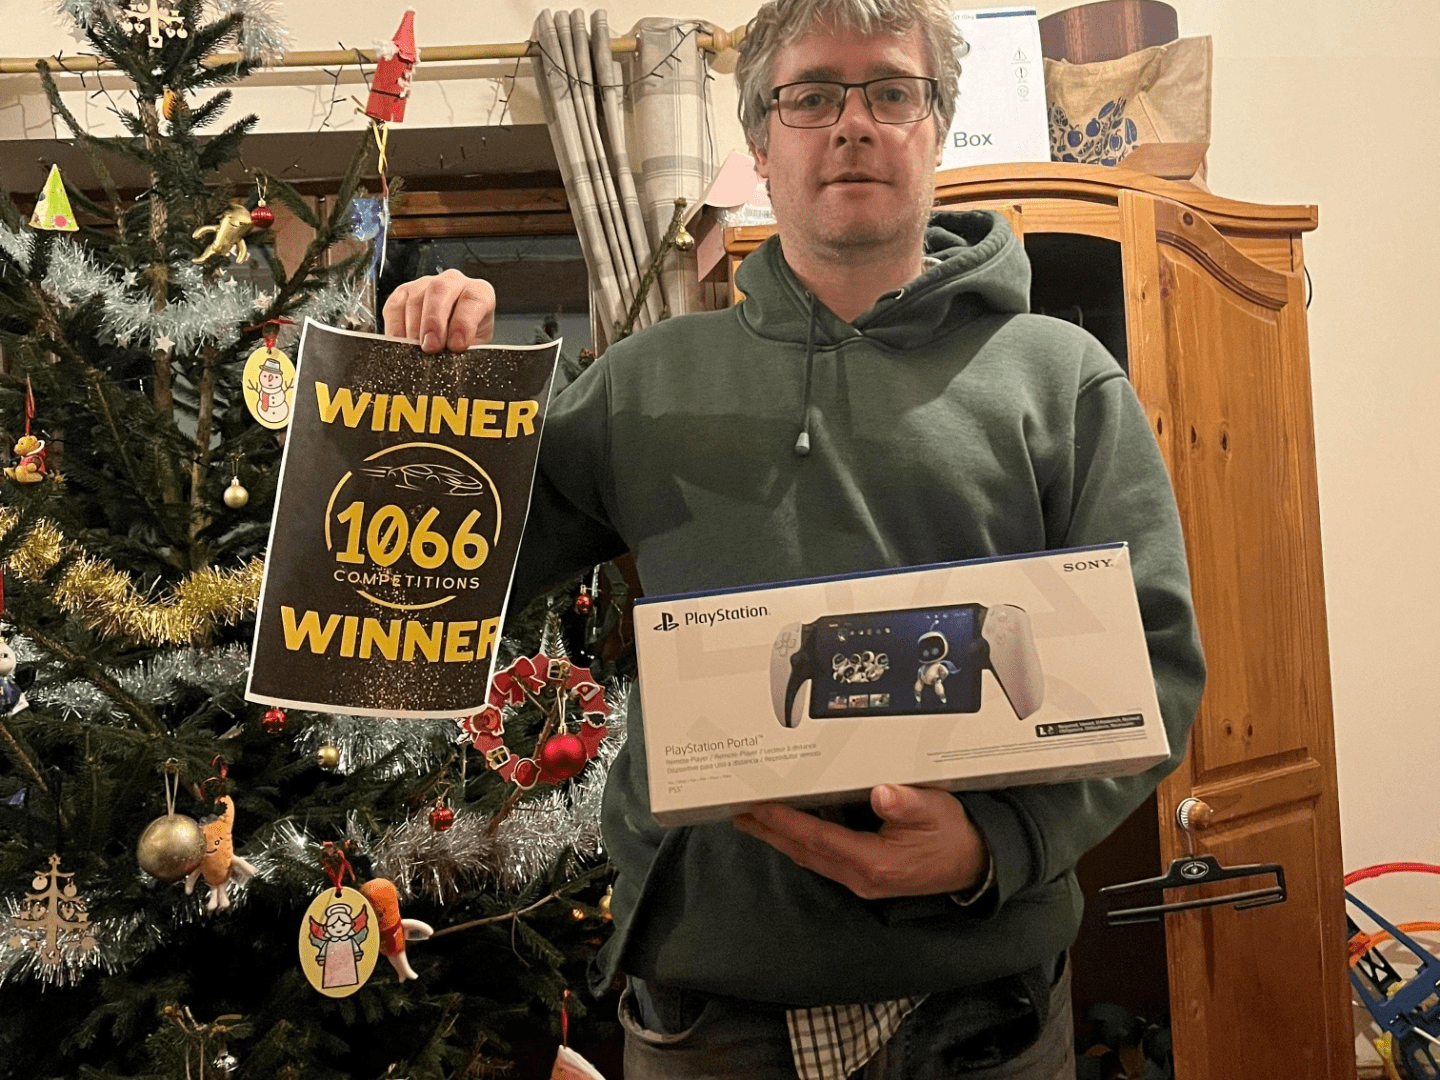 Congratulations to Ben Wordsworth, winner of a PlayStation Portal!